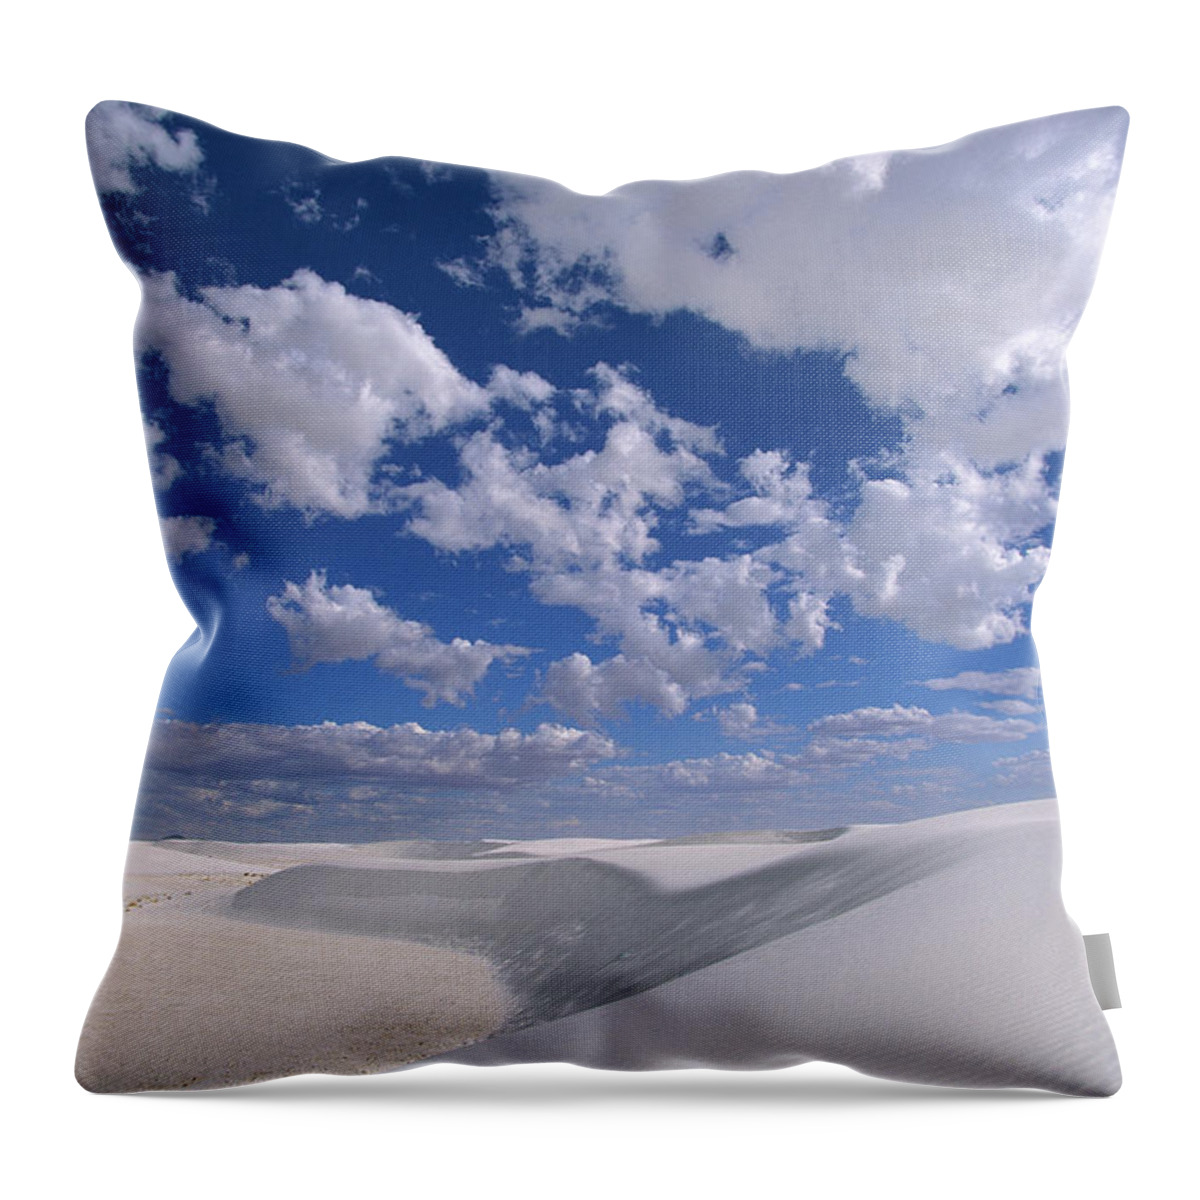 00340454 Throw Pillow featuring the photograph White Gypsum Dunes by Yva Momatiuk John Eastcott